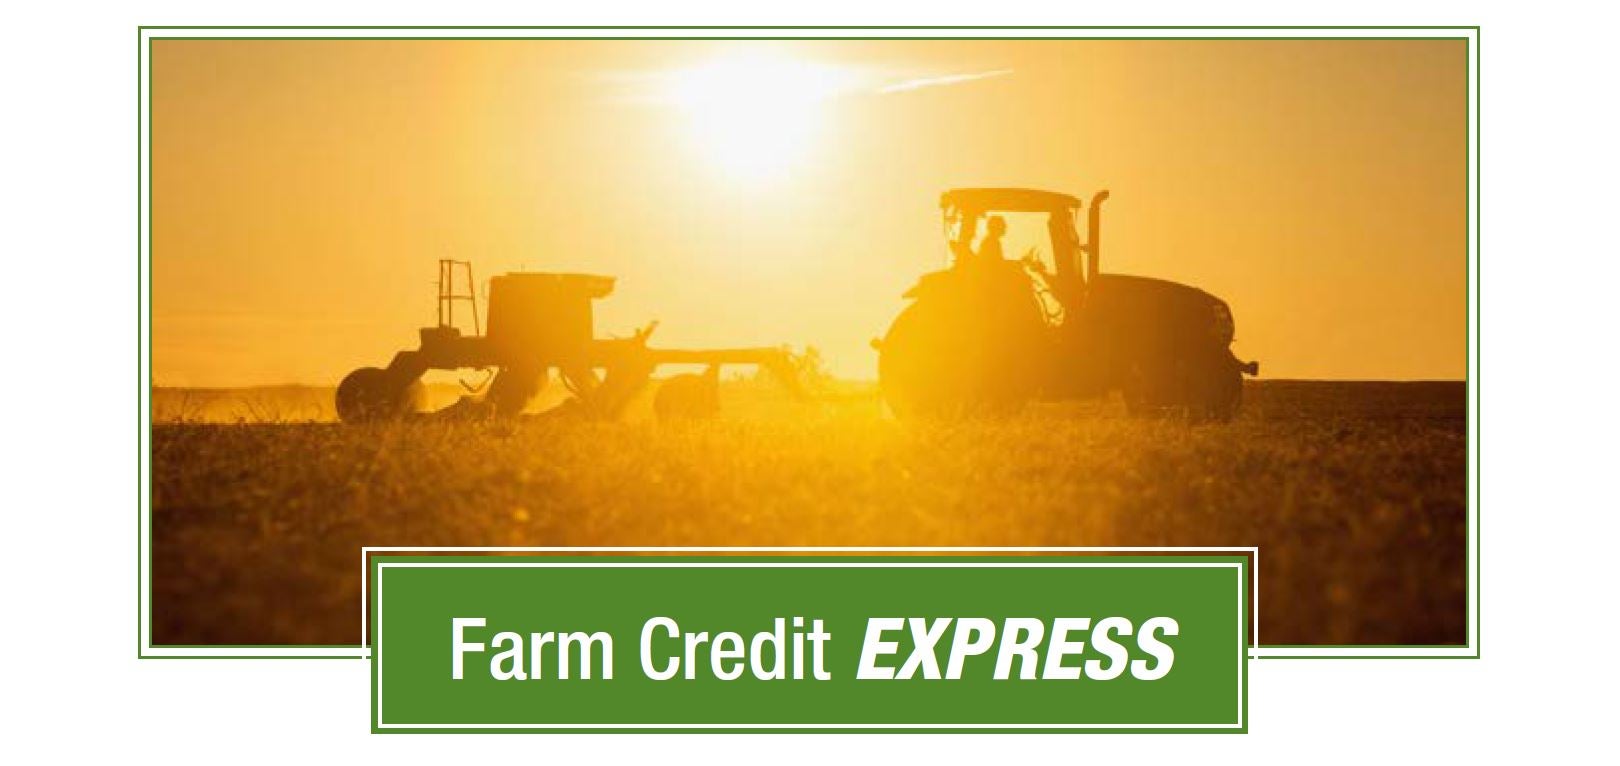  farm credit express, financing farm equipment, farm credit express dealer, equipment financing, farm credit, tractor financing